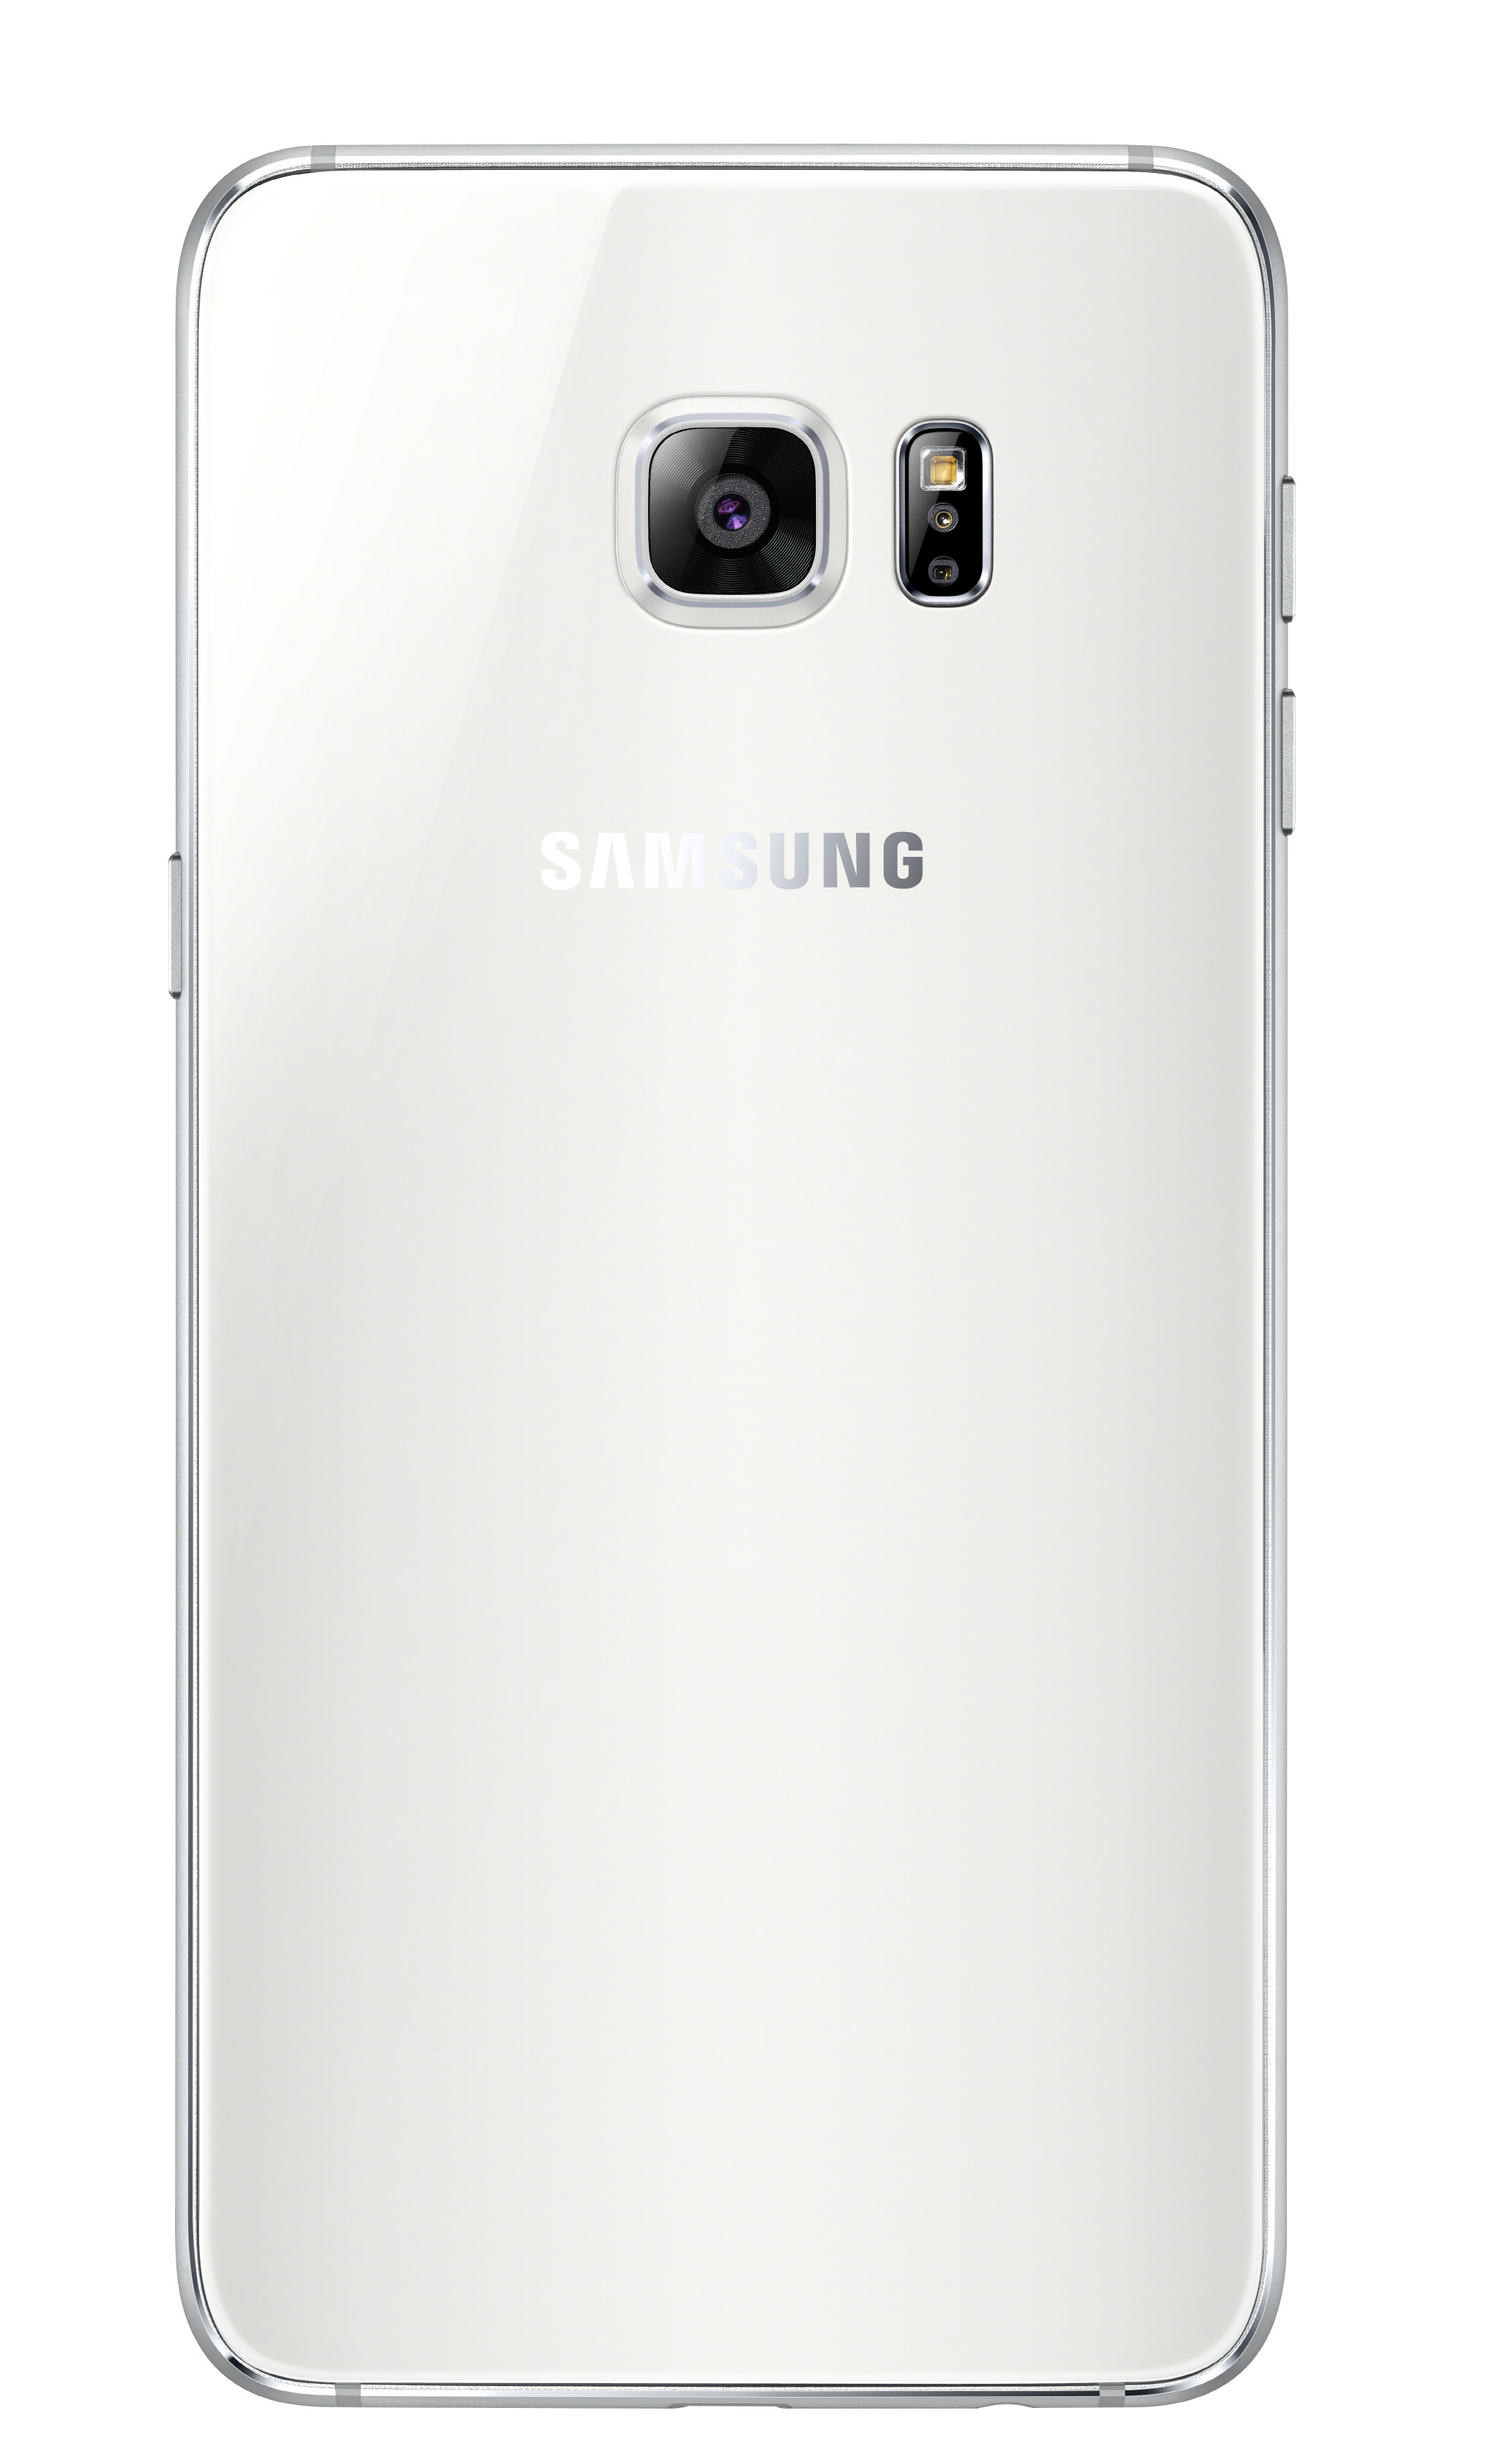 Galaxy-S6-edge+_back_White-Pearl